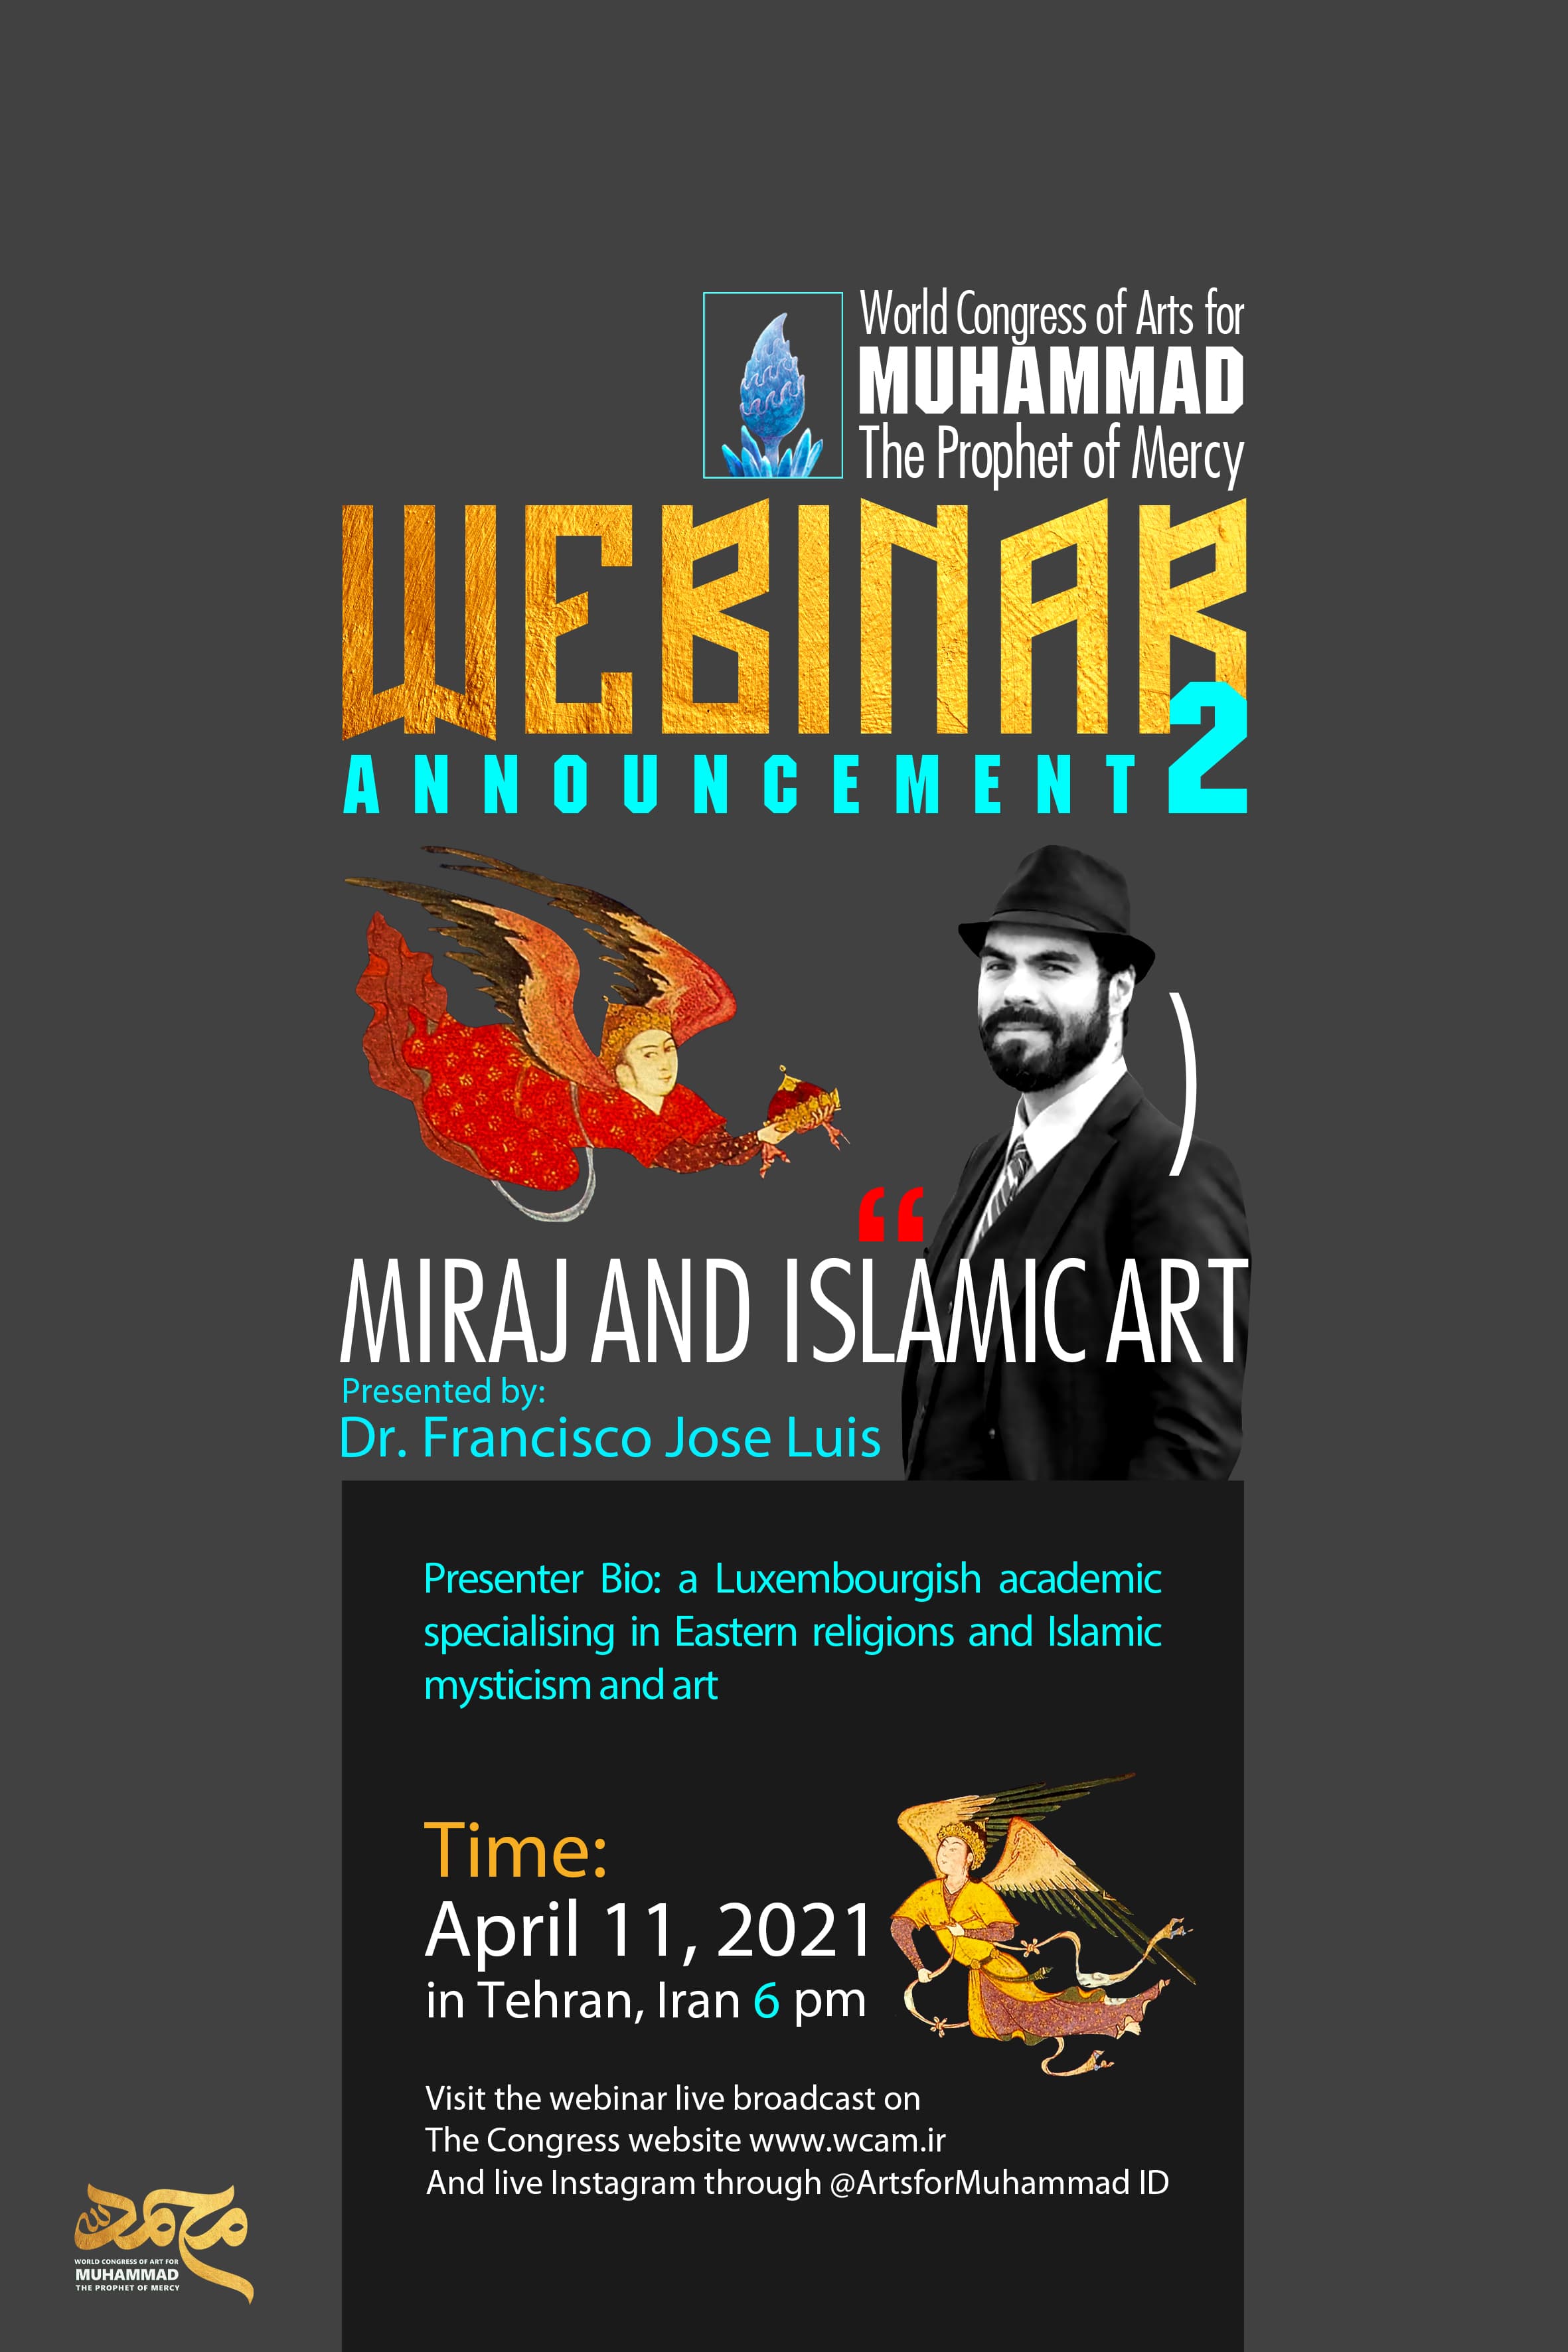 Webinar 2, Miraj and Islamic art